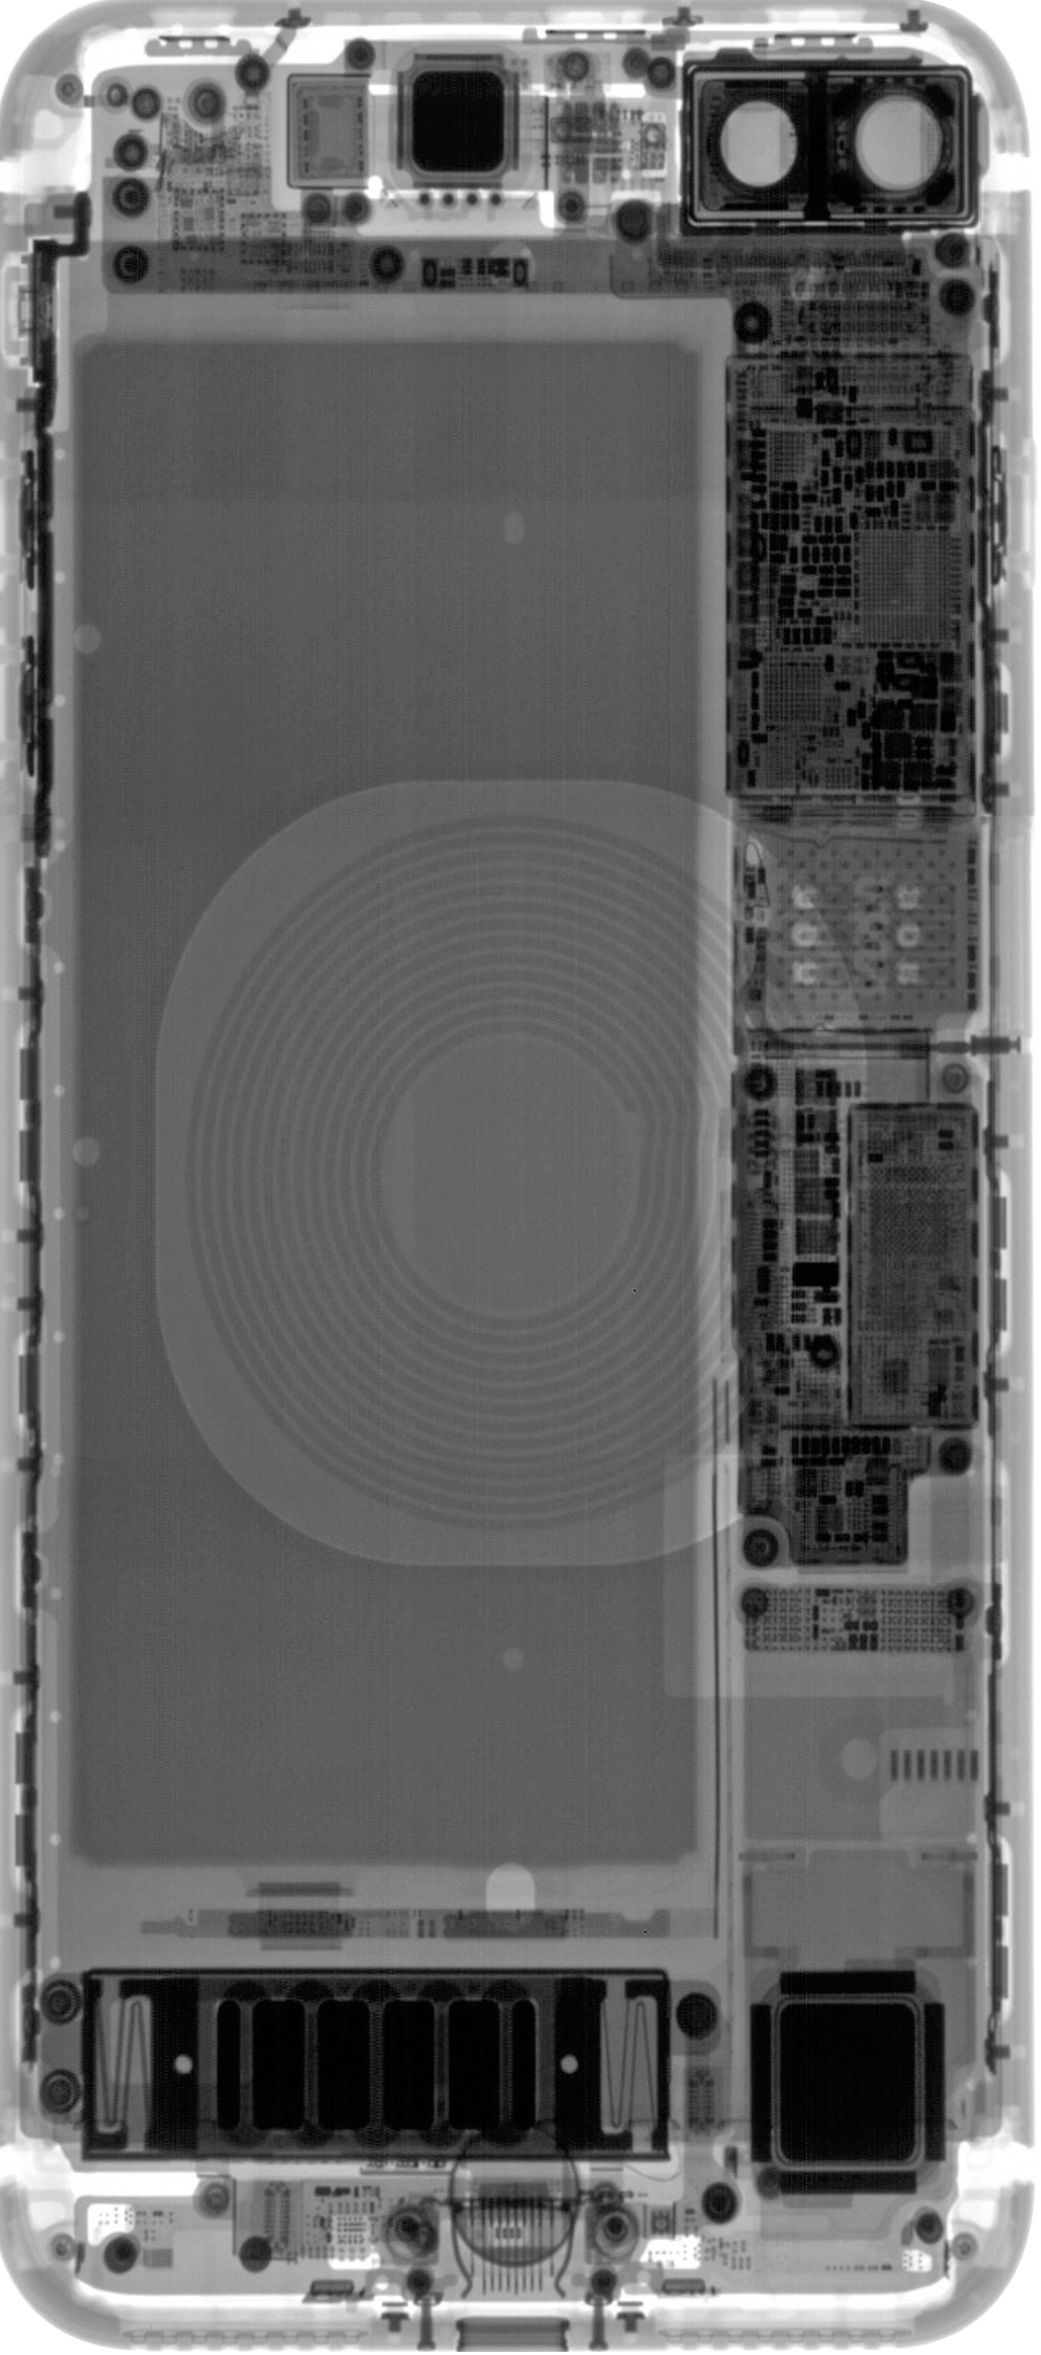 Inside Wallpaper For iPhone Inside Wallpaper For iPhone Hp Samsung J7 Prime Wallpaper & Background Download